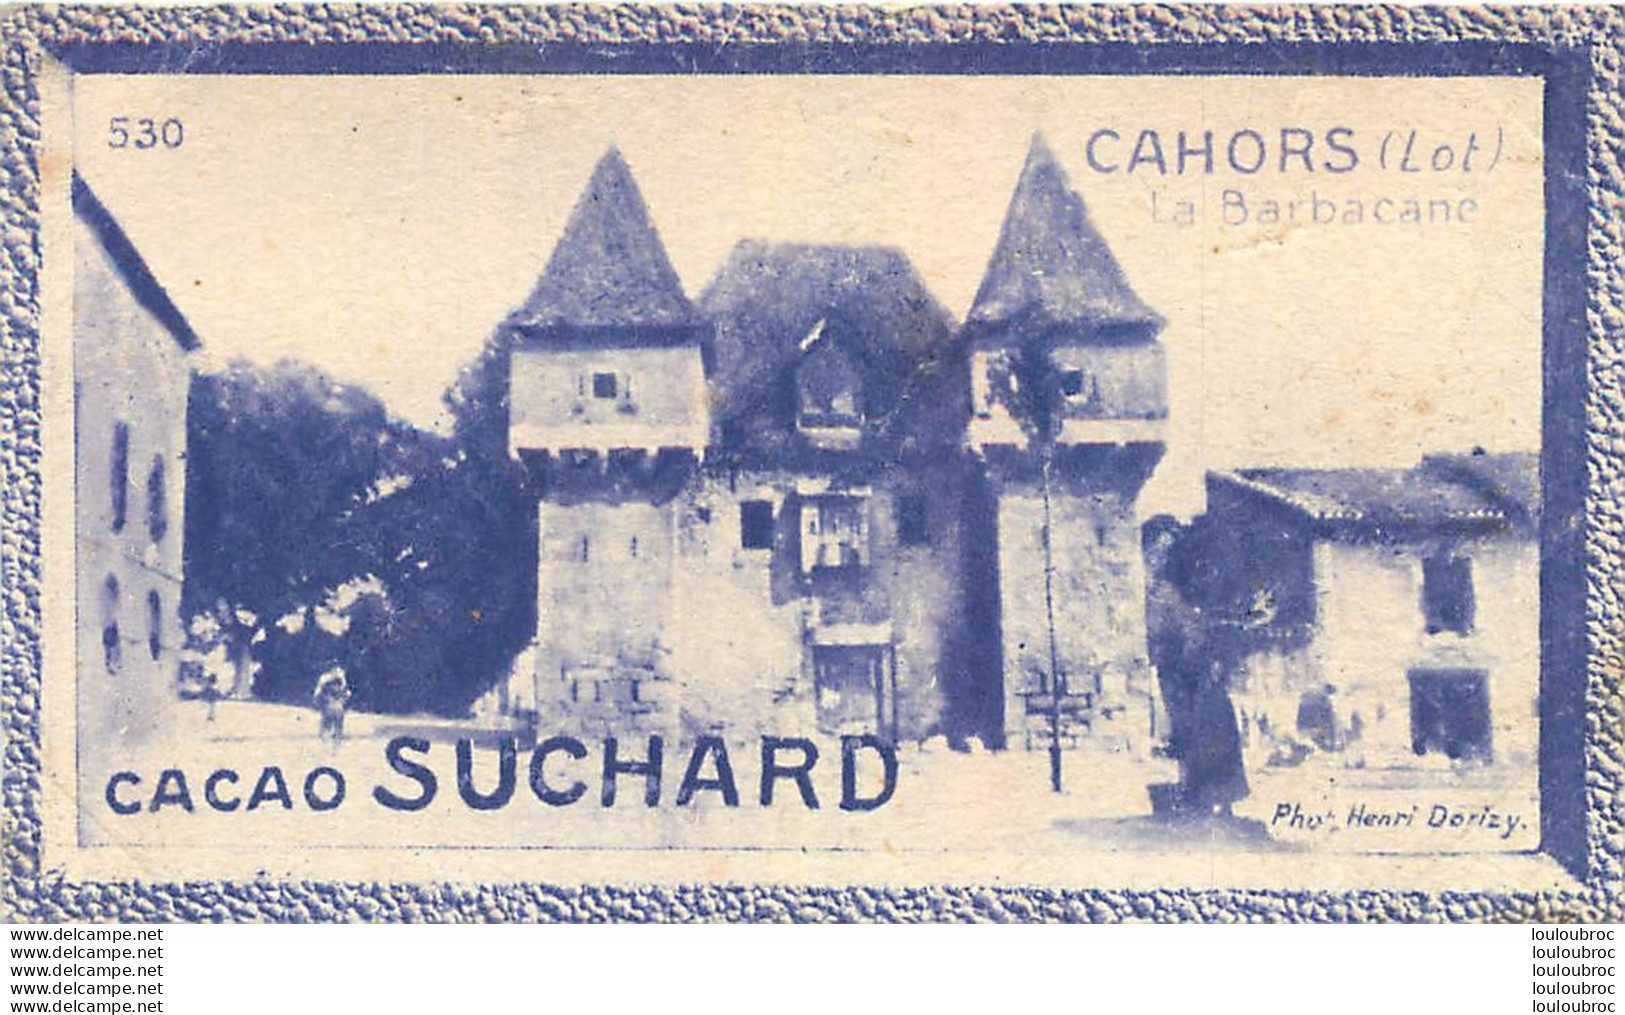 CHROMO CACAO SUCHARD CAHORS  LA BARBACANE GRAND CONCOURS DES VUES DE FRANCE  PHOTO DORIZY - Suchard